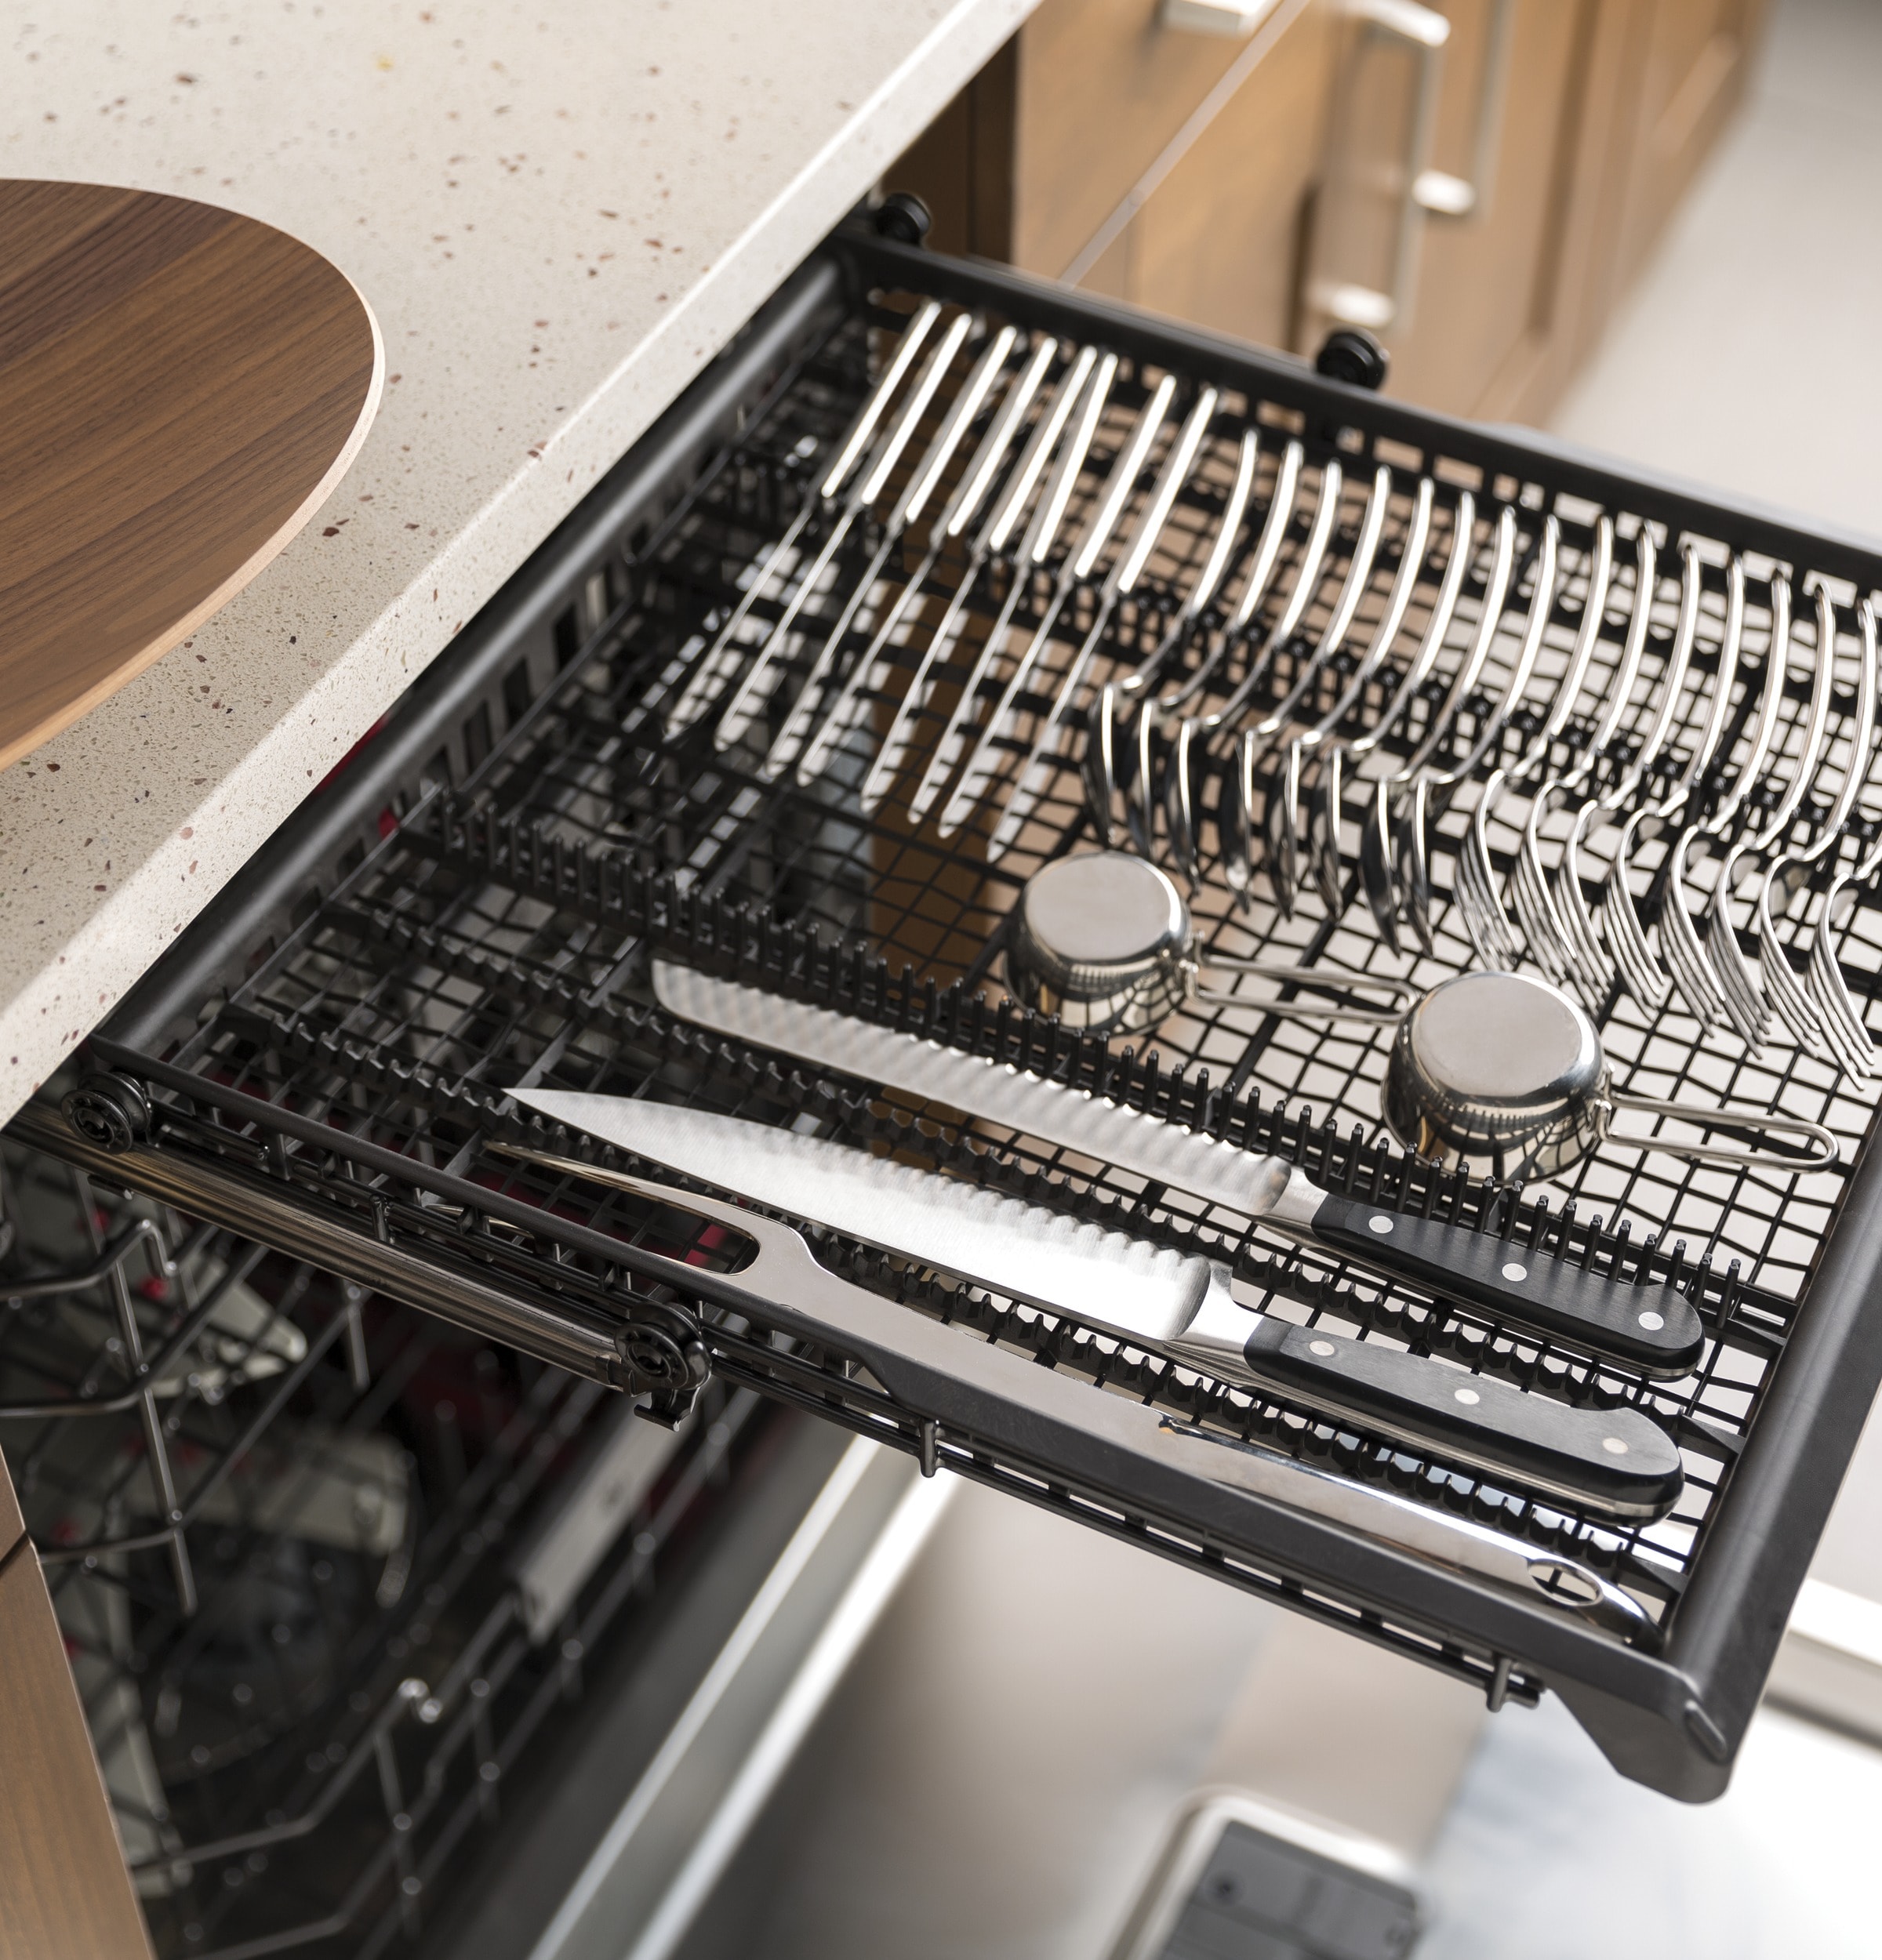 GE Appliances GDT665SMNES GE® Stainless Steel Interior Dishwasher